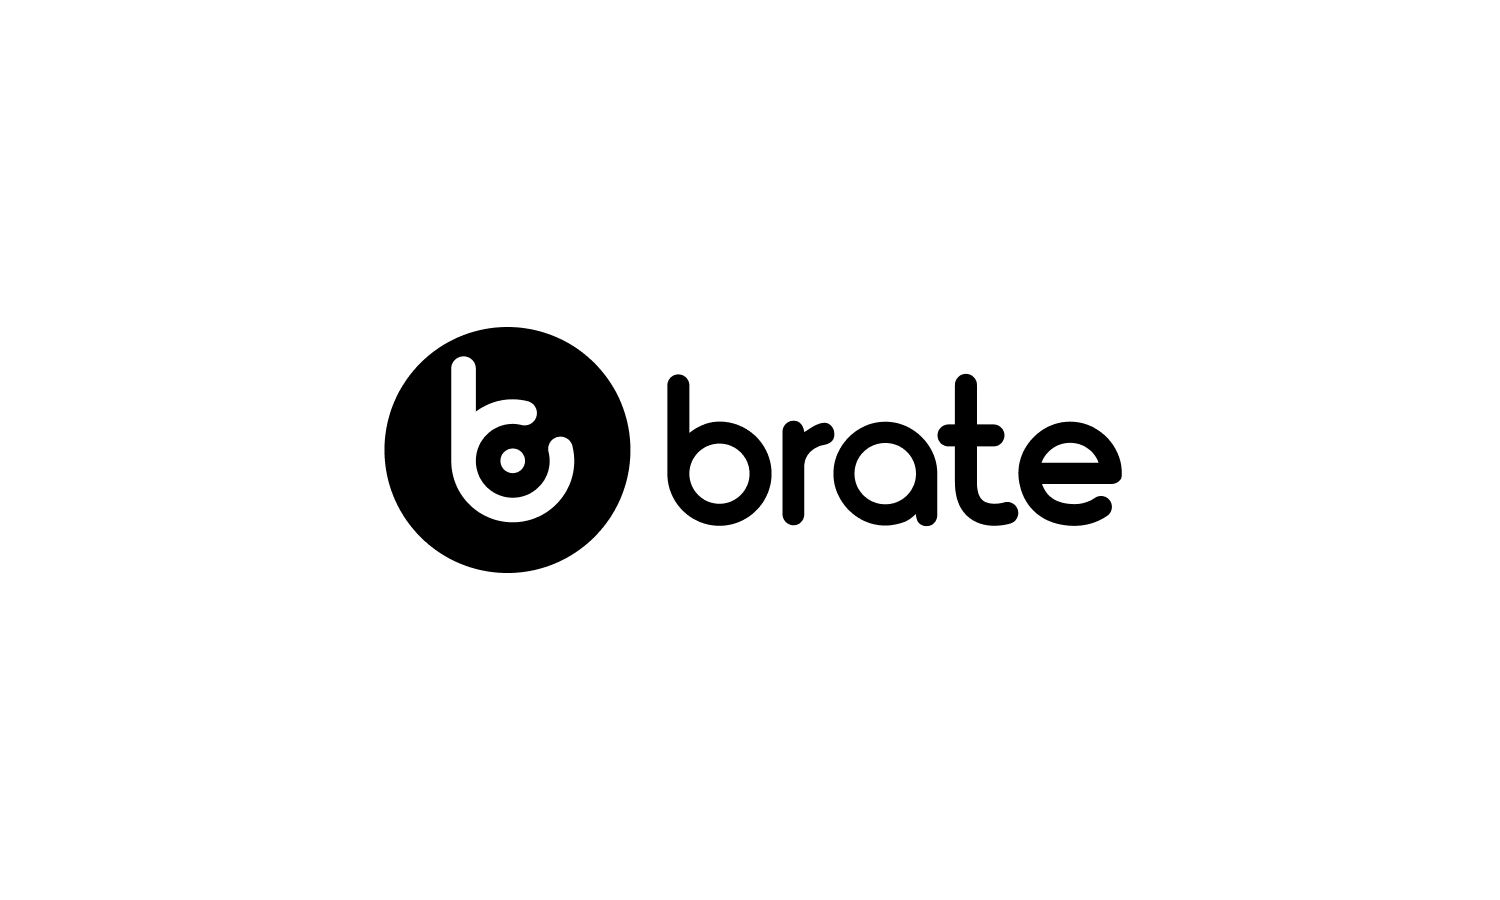 brate logo dark